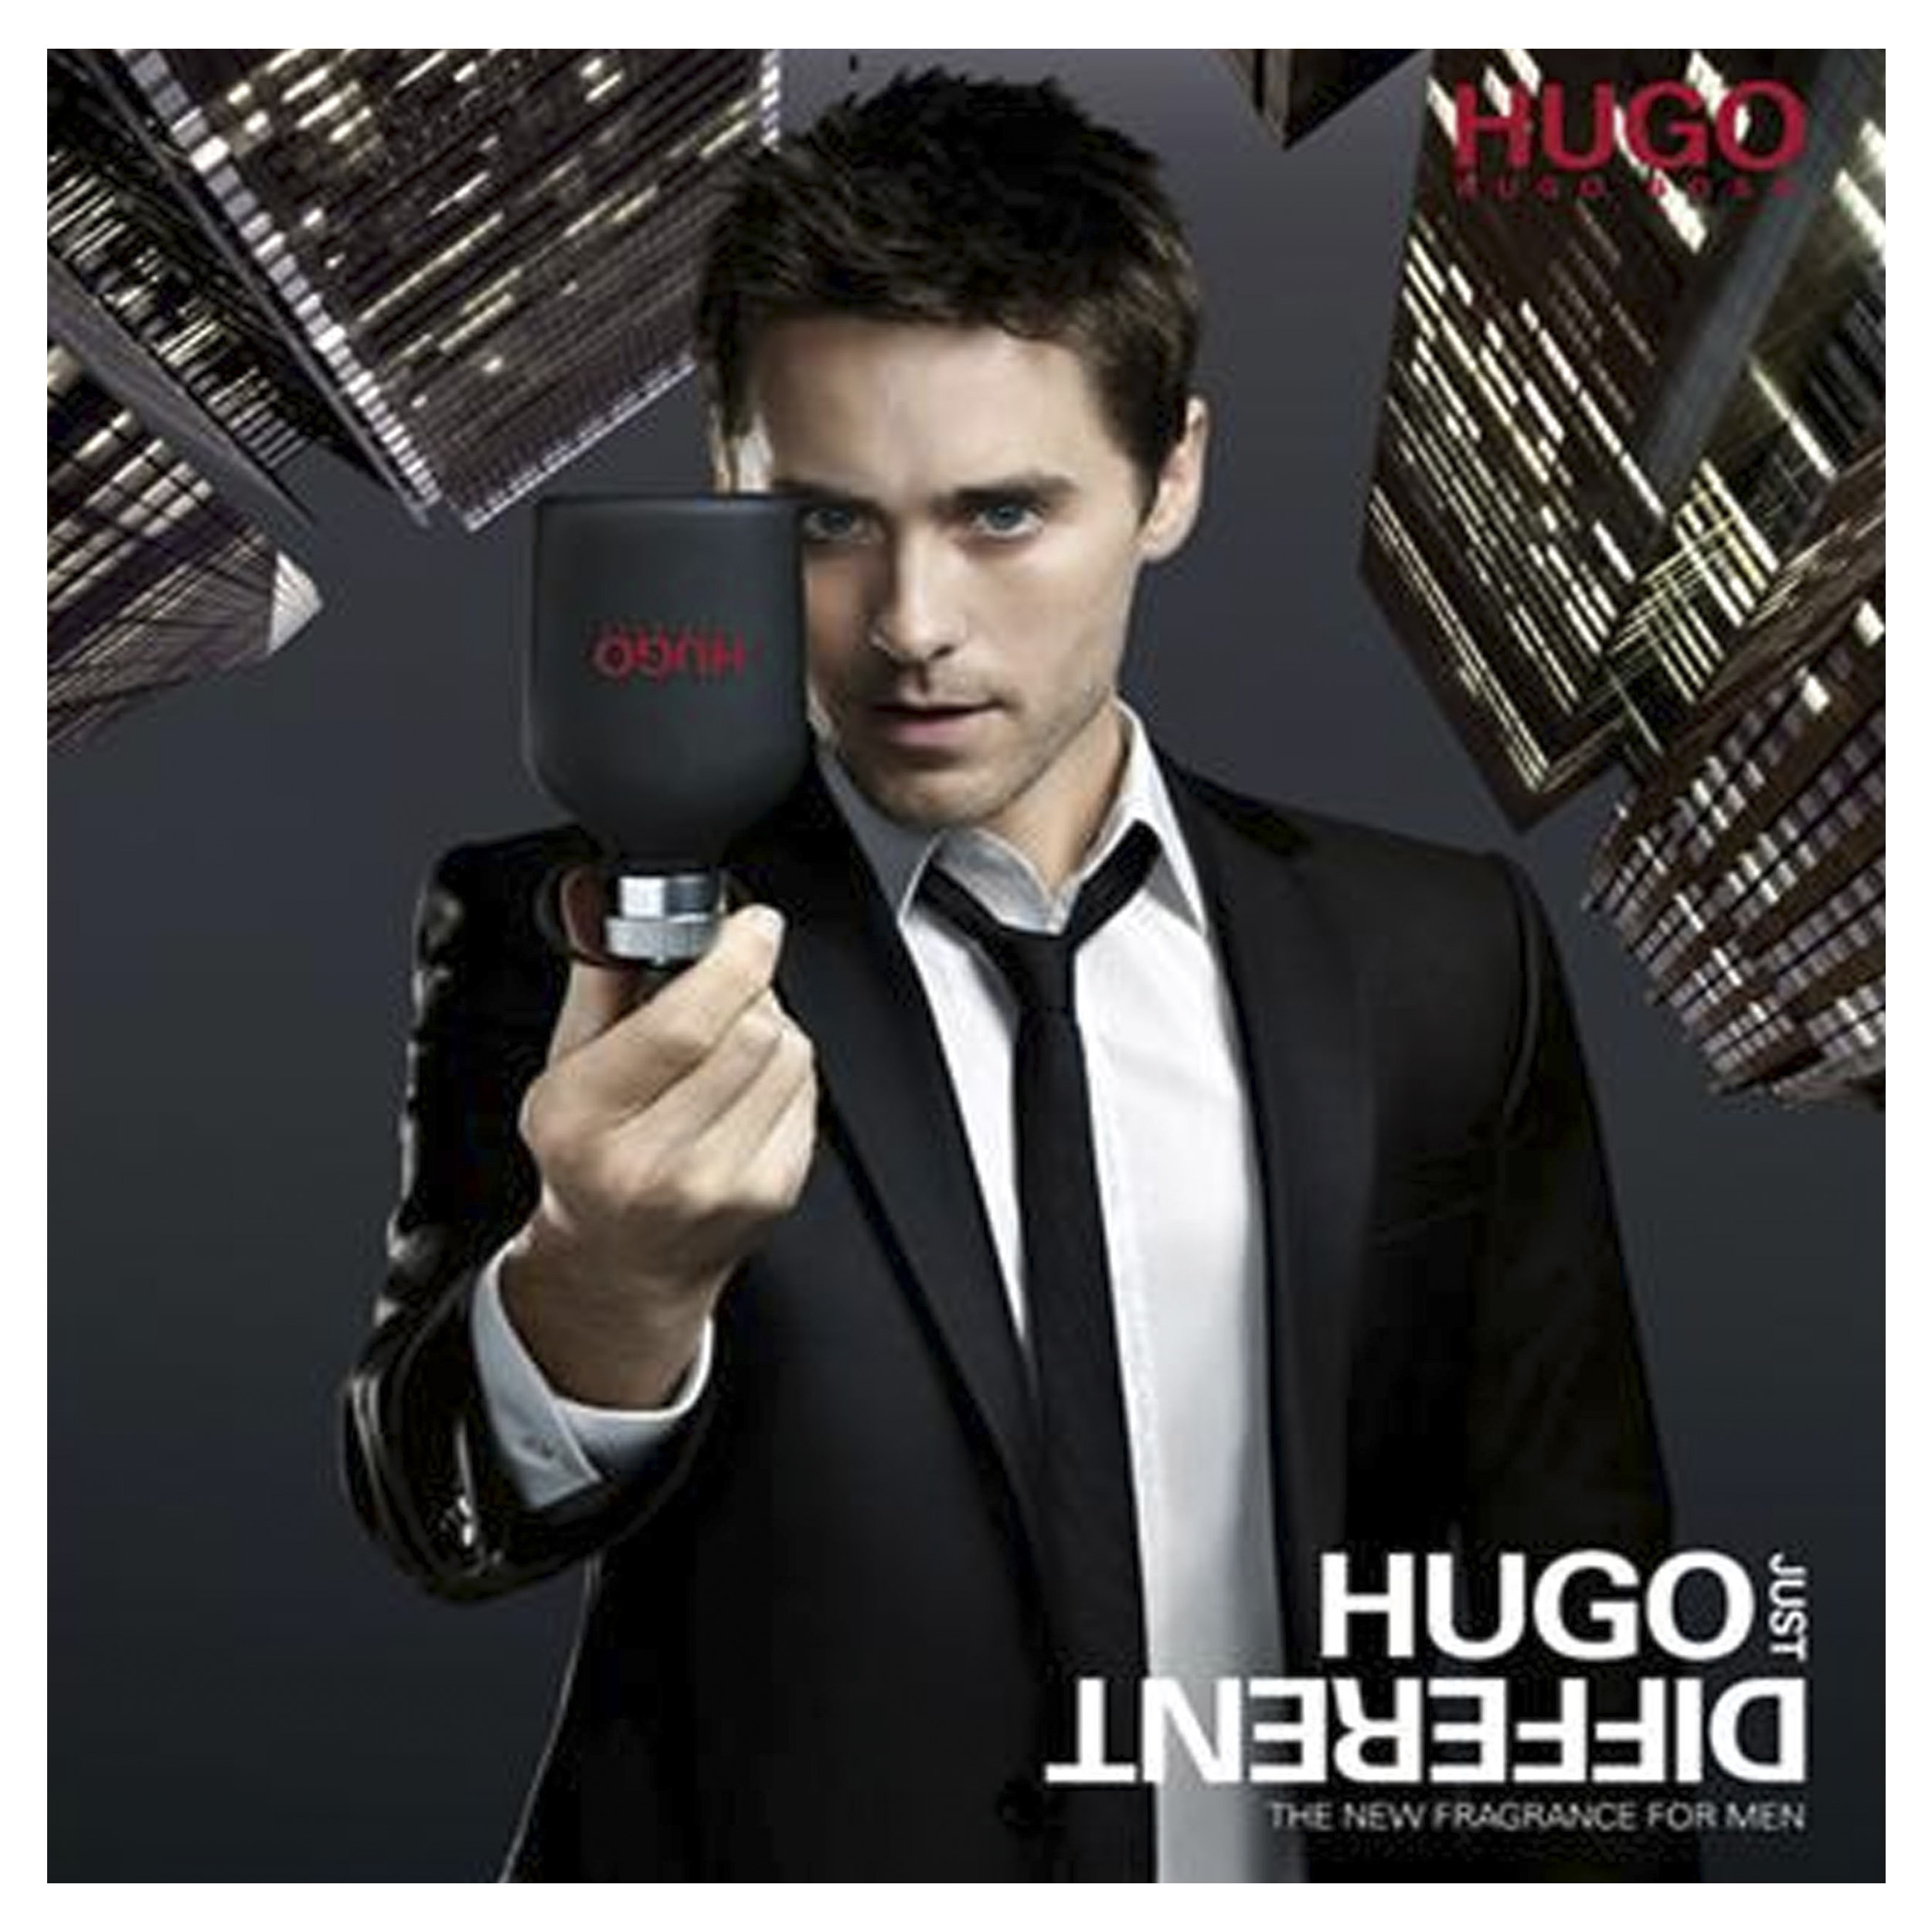 Perfume Hugo Just Different Hugo Boss  (Replica Con Fragancia Importada)- Hombre